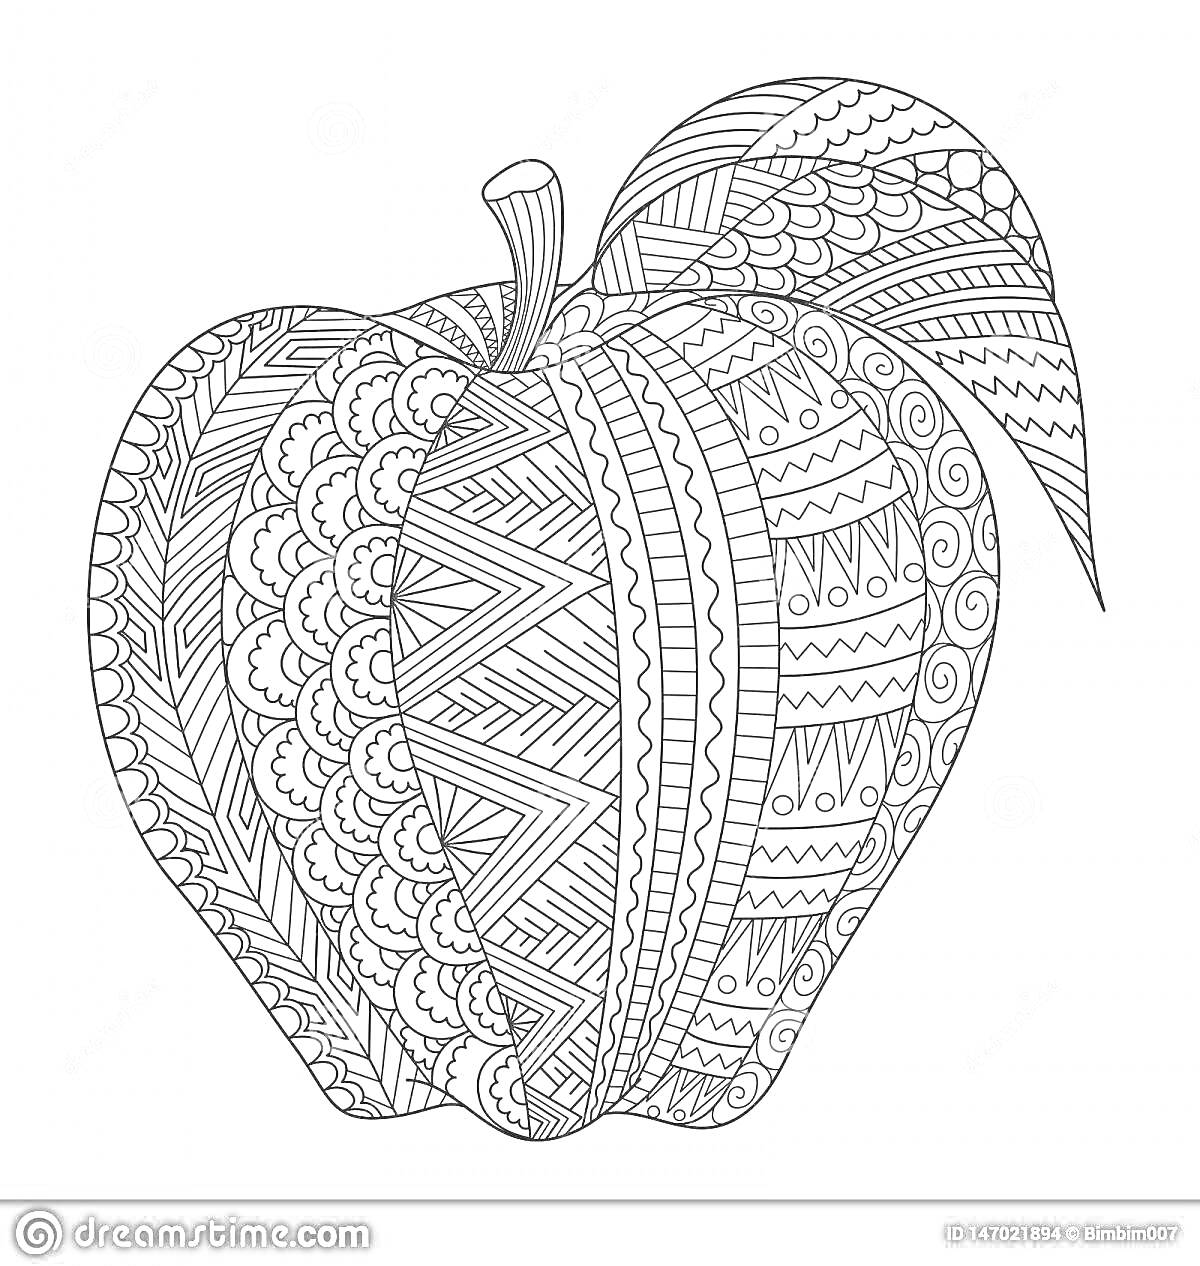 Раскраска Антистресс-раскраска яблоко с узорами, зигзагами, спиралями и листьями